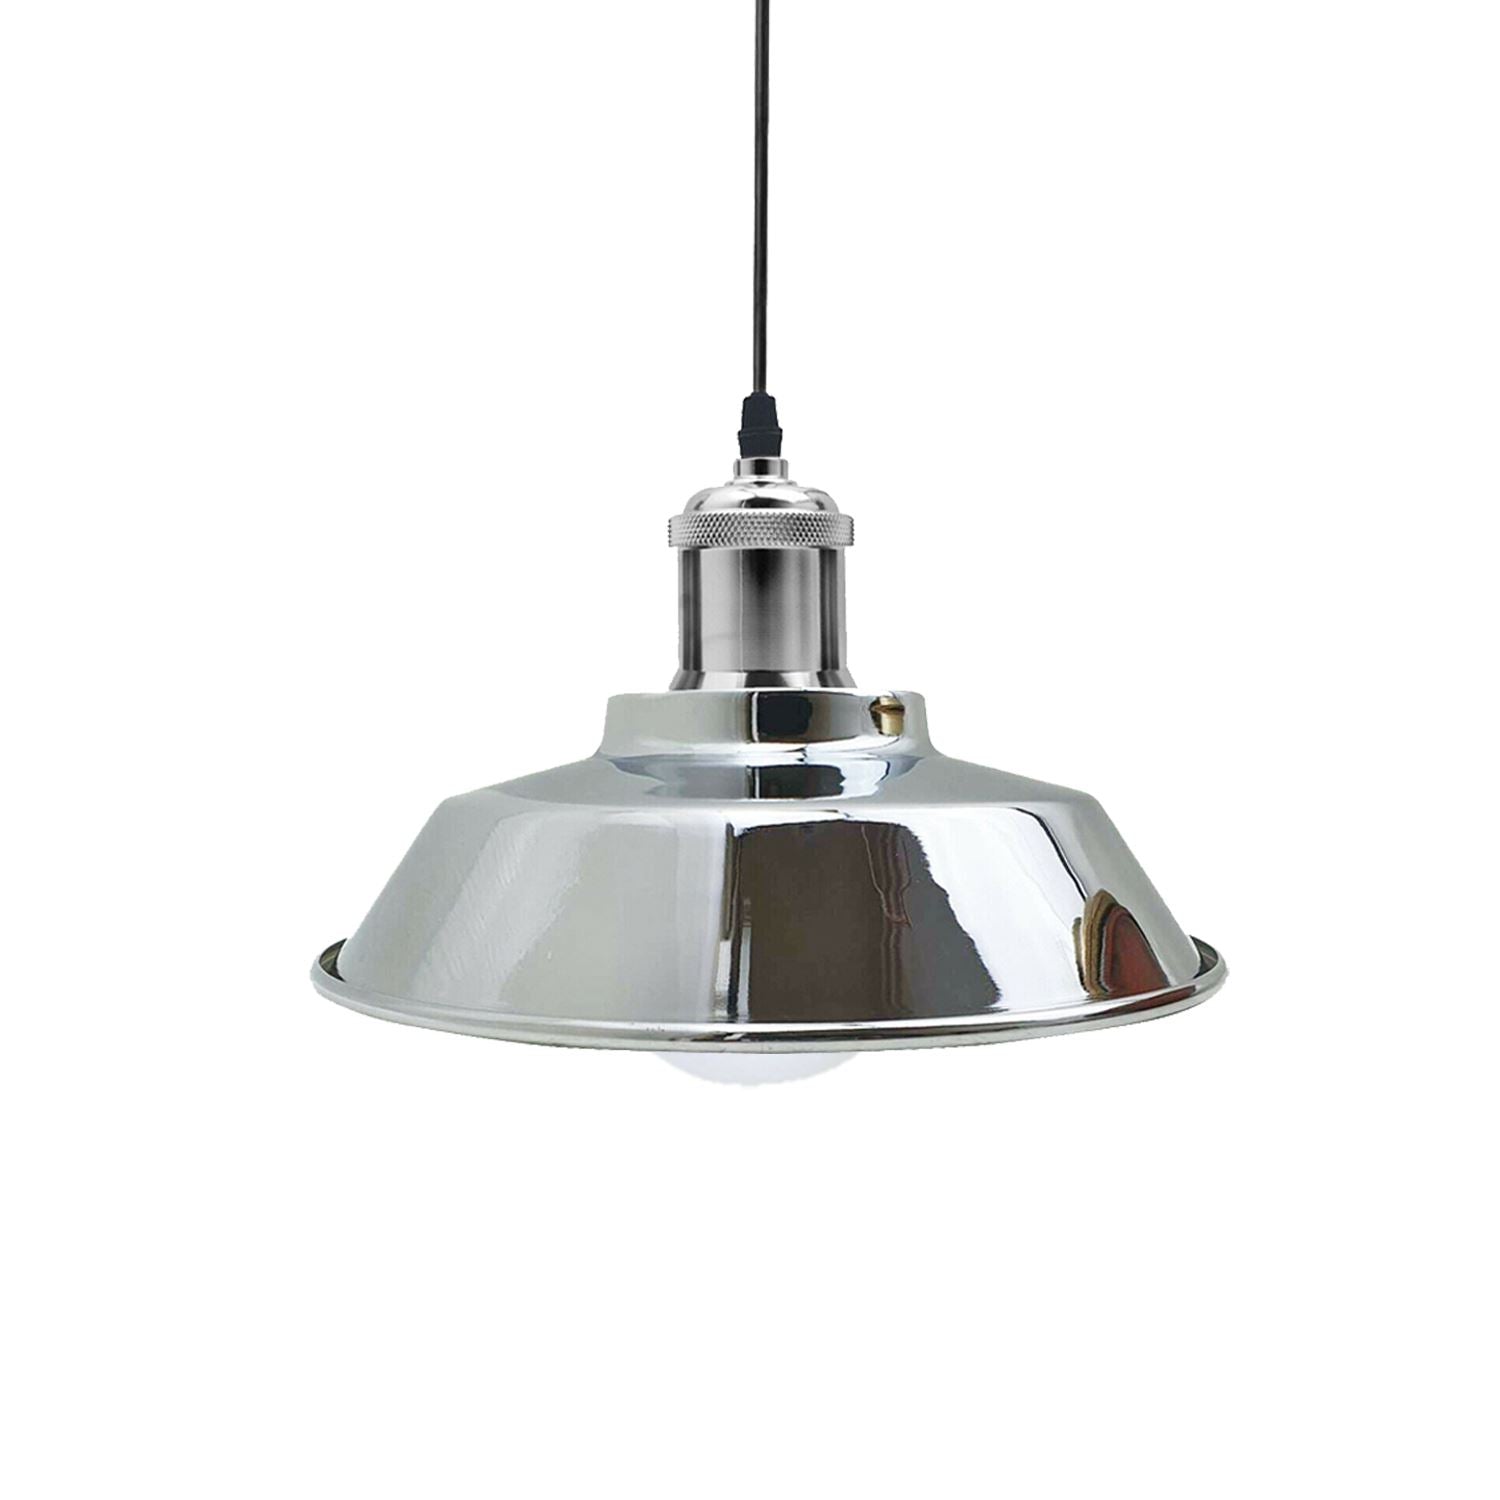 Vintage Modern Industrial Ceiling Lamp Shade Pendant Light Retro Loft Satin Nickel~1322 - LEDSone UK Ltd